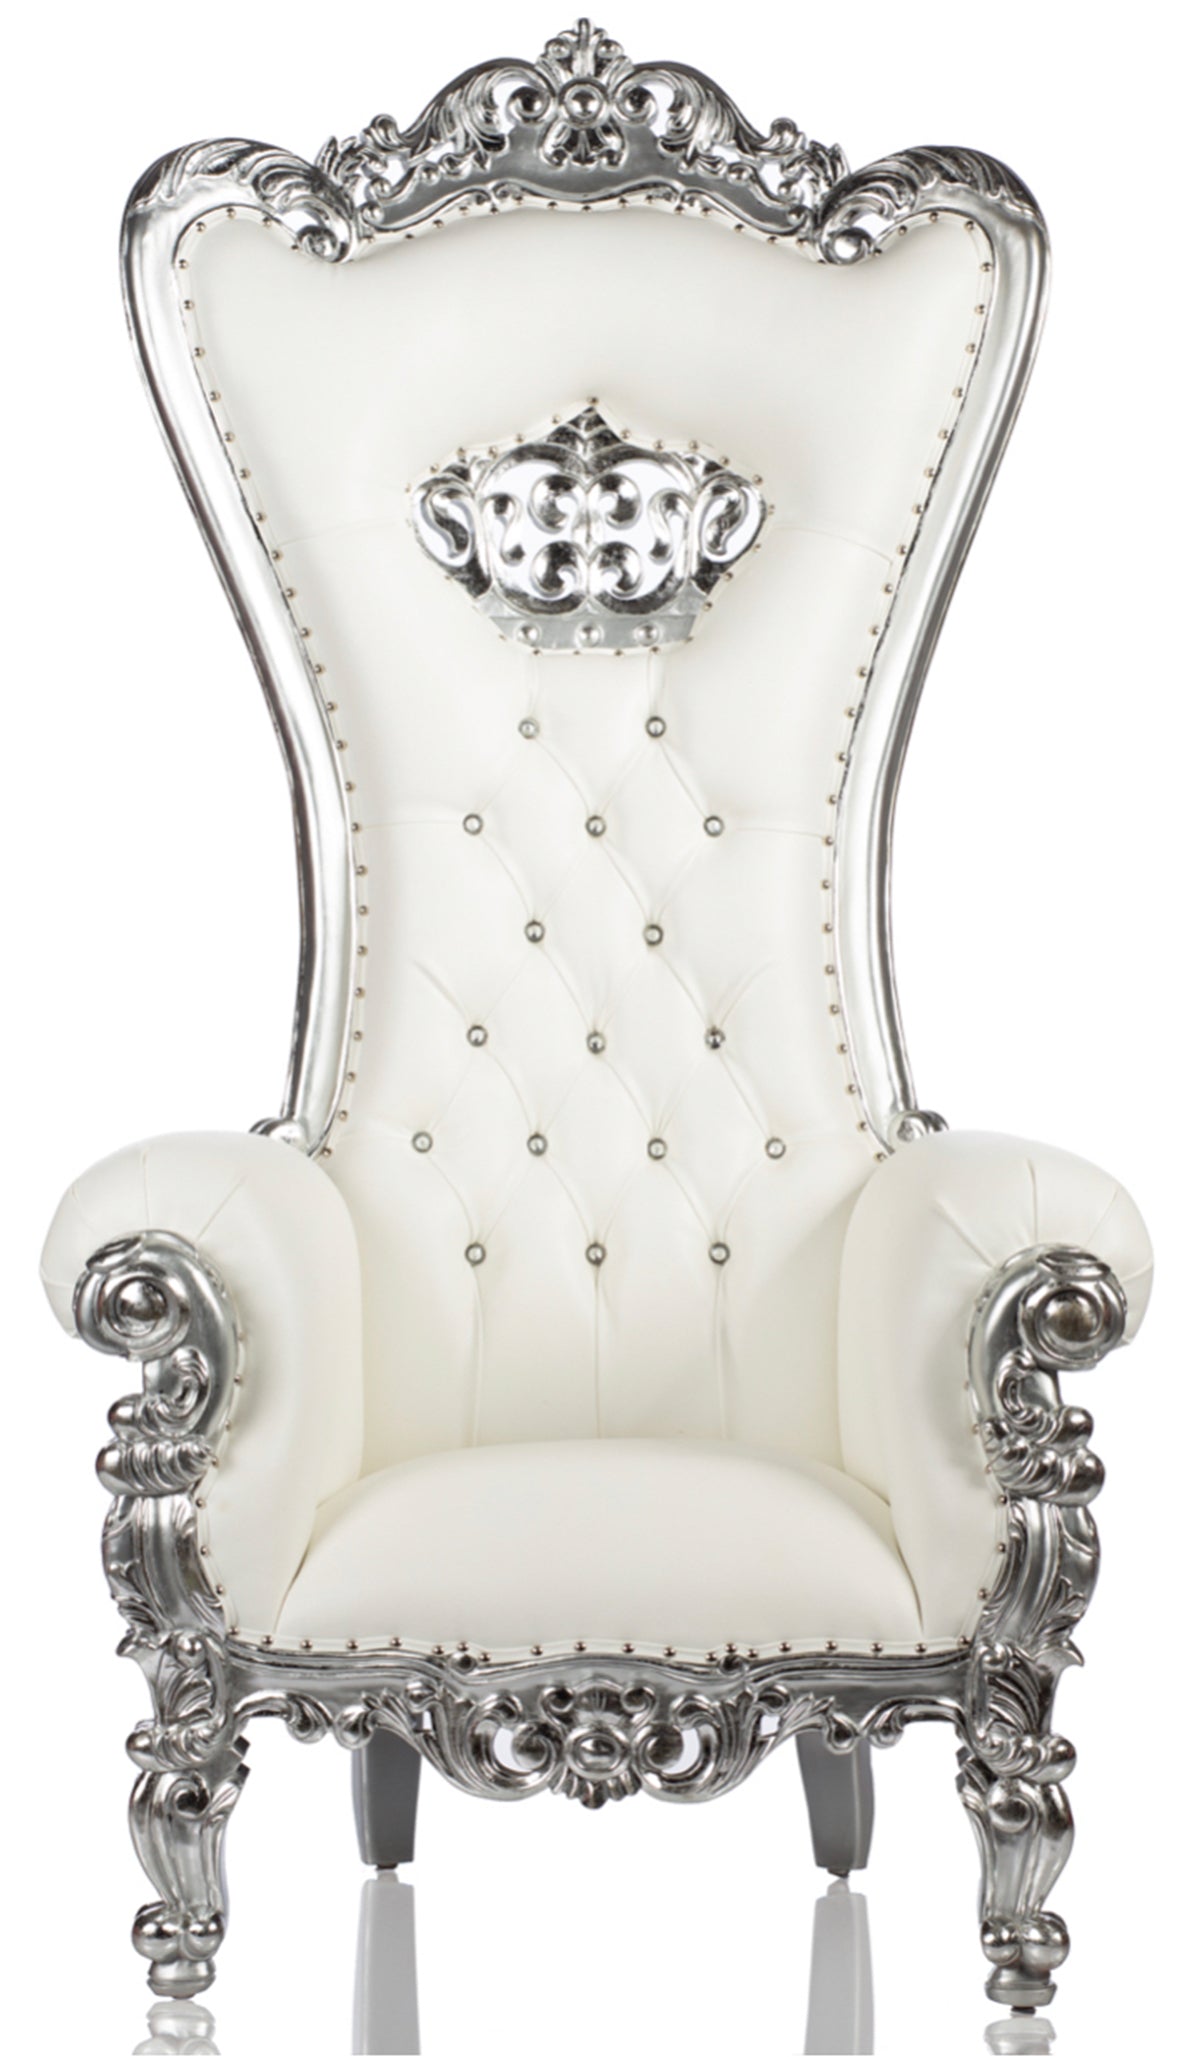 Crowned Lenox Shellback throne (White/Silver)